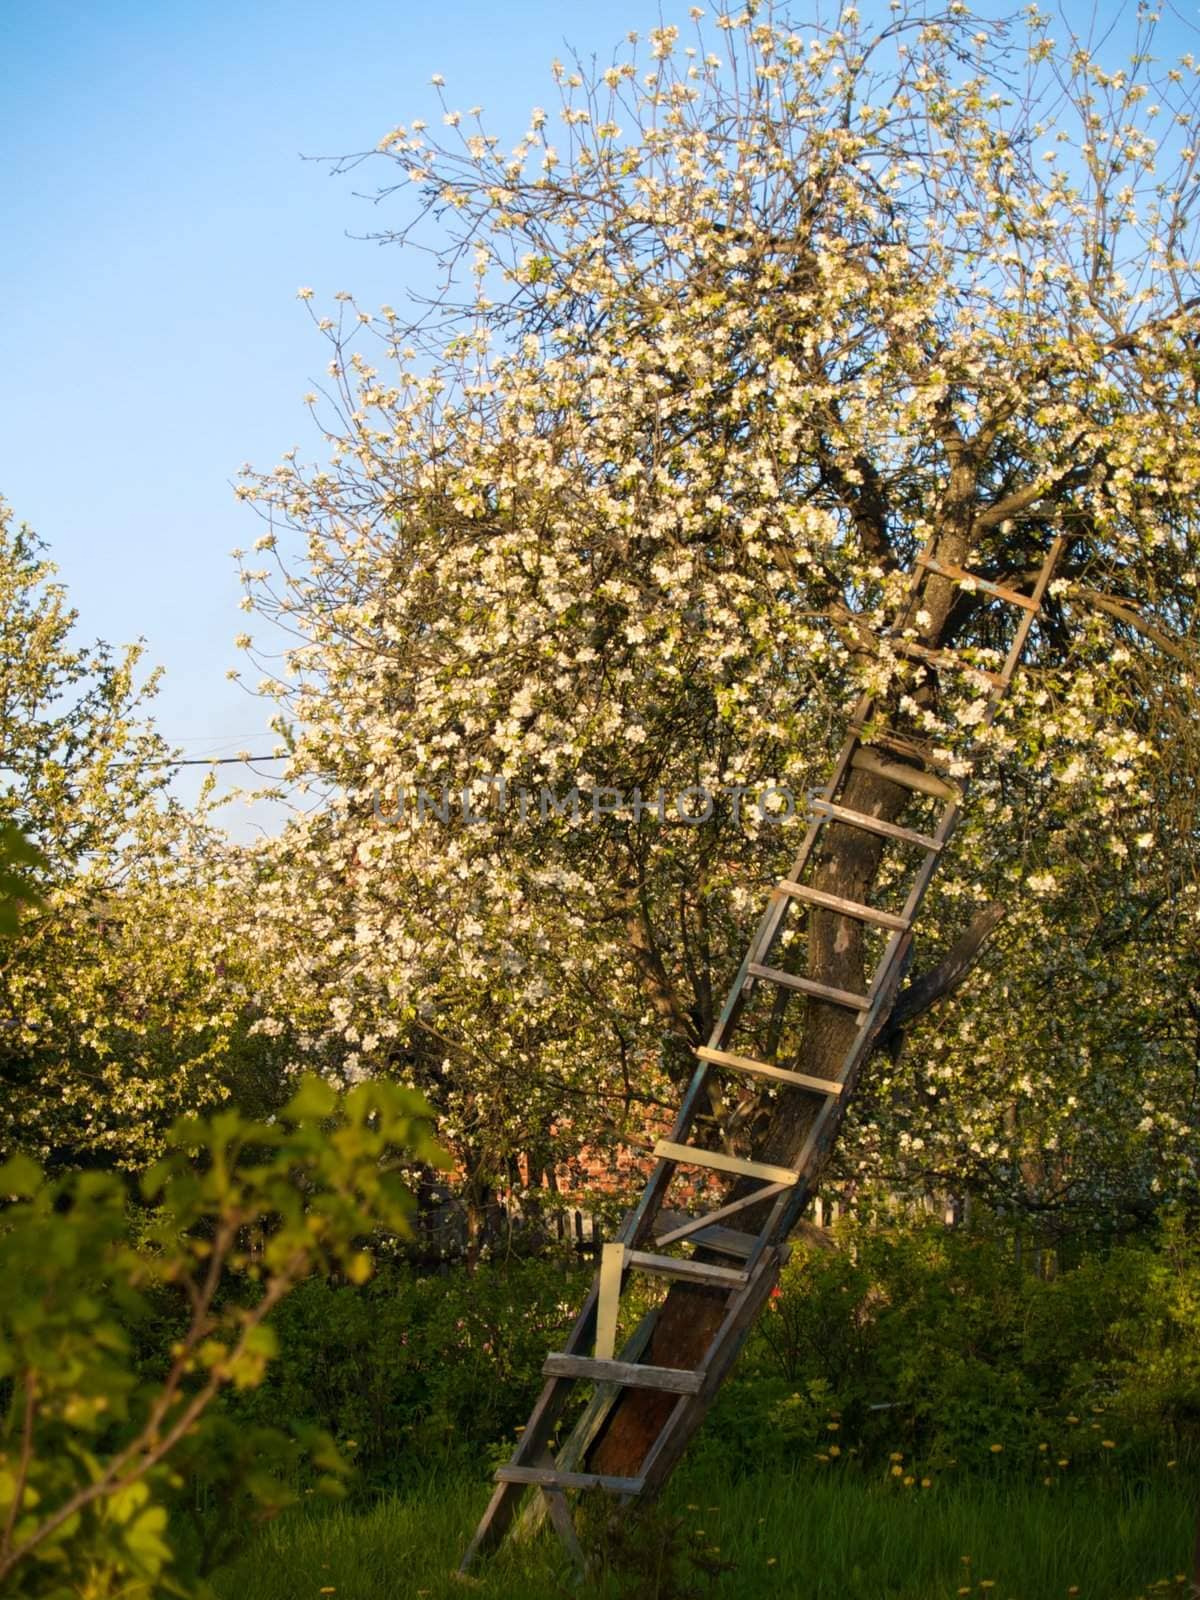 Ladder near blooming apple-tree by liseykina